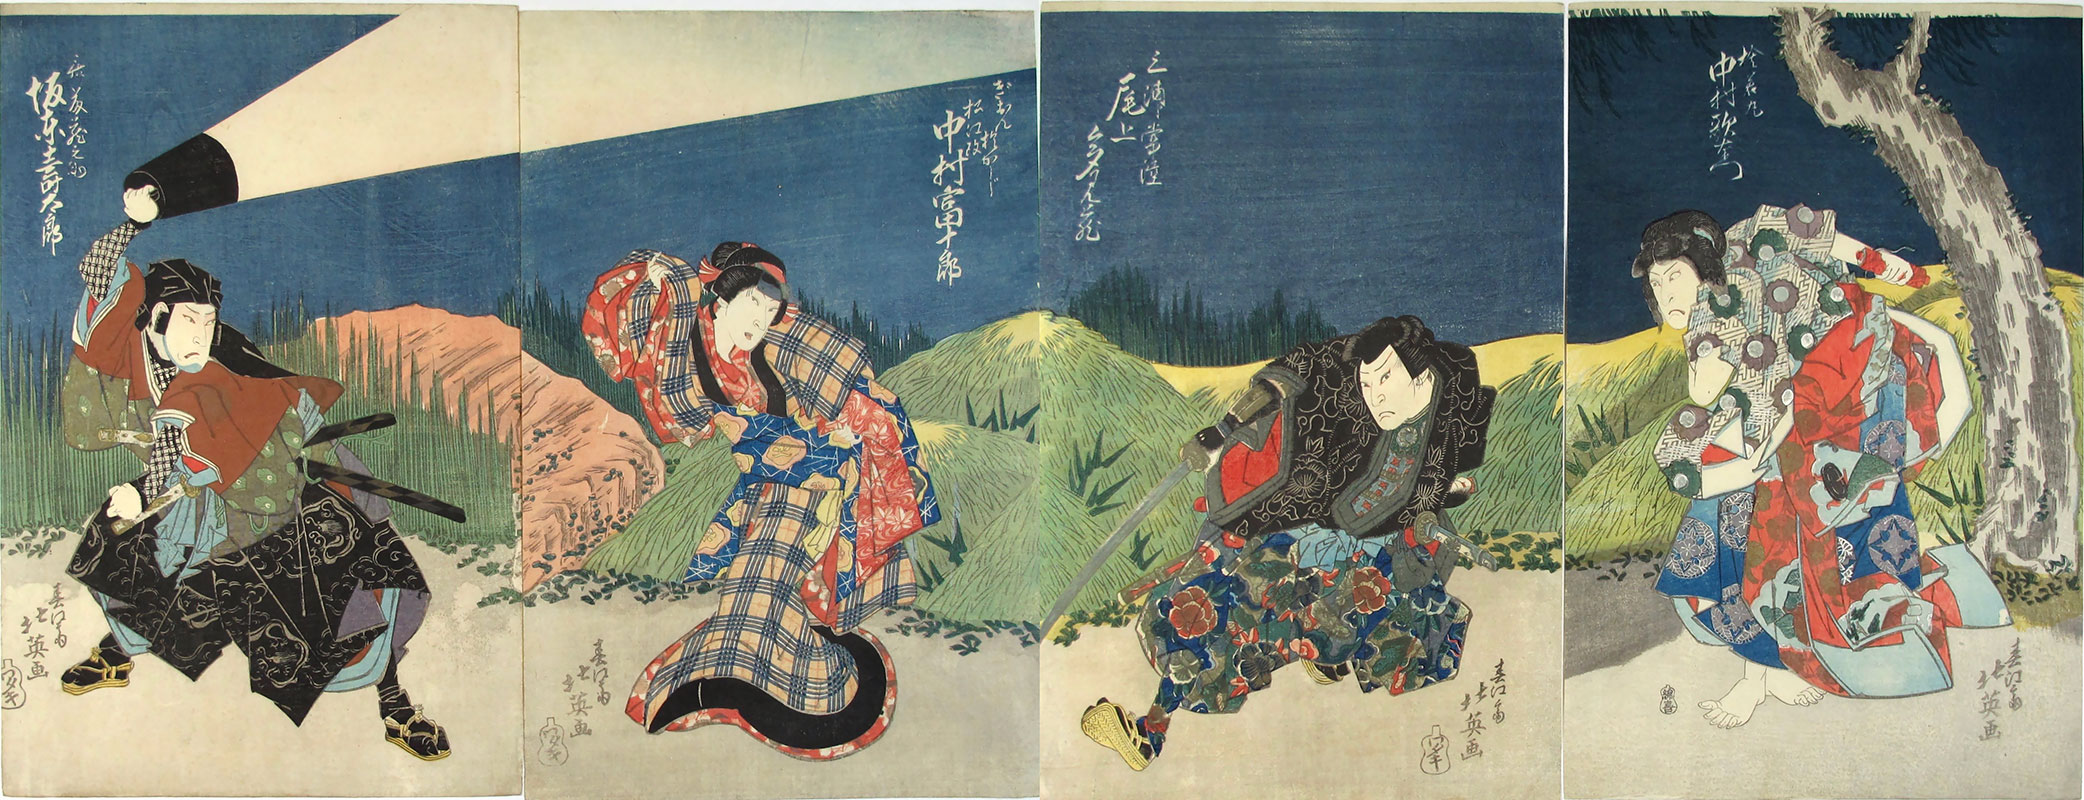 Repro Japanese Woodblock Print by Shubaisai Hokuei 